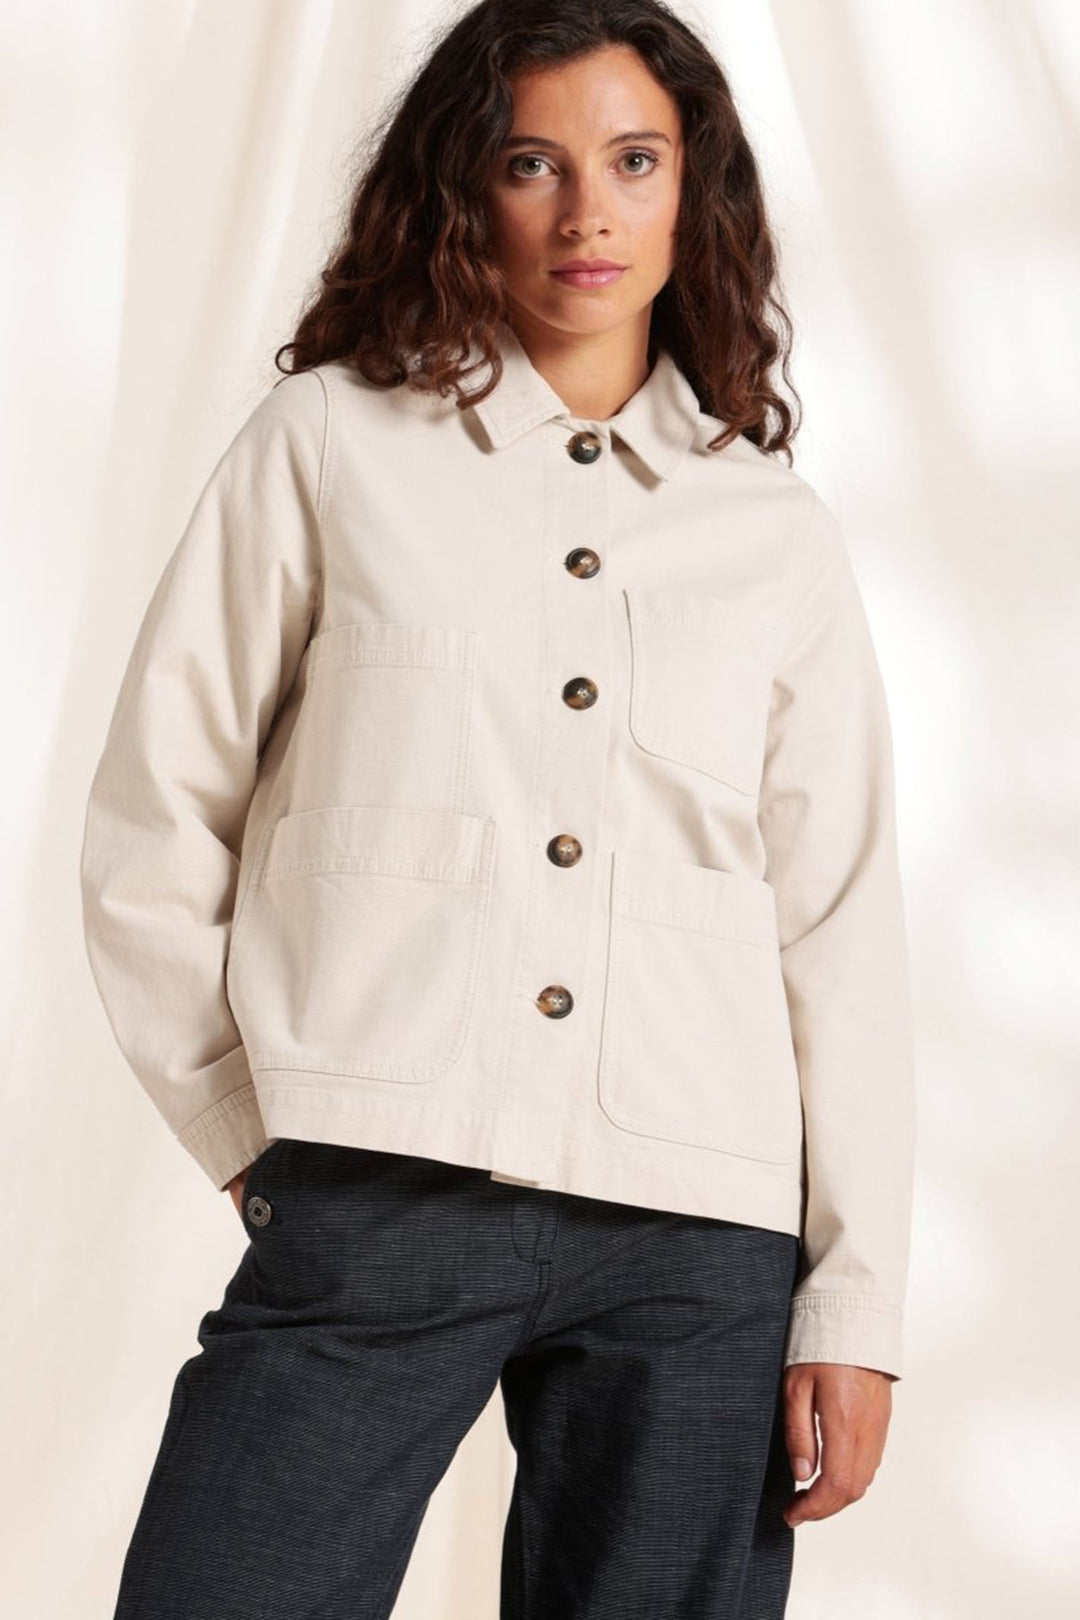 Mat De Misaine Verone-34845 U630 Beige Floating Wood Shirt Jacket - Shirley Allum Boutique